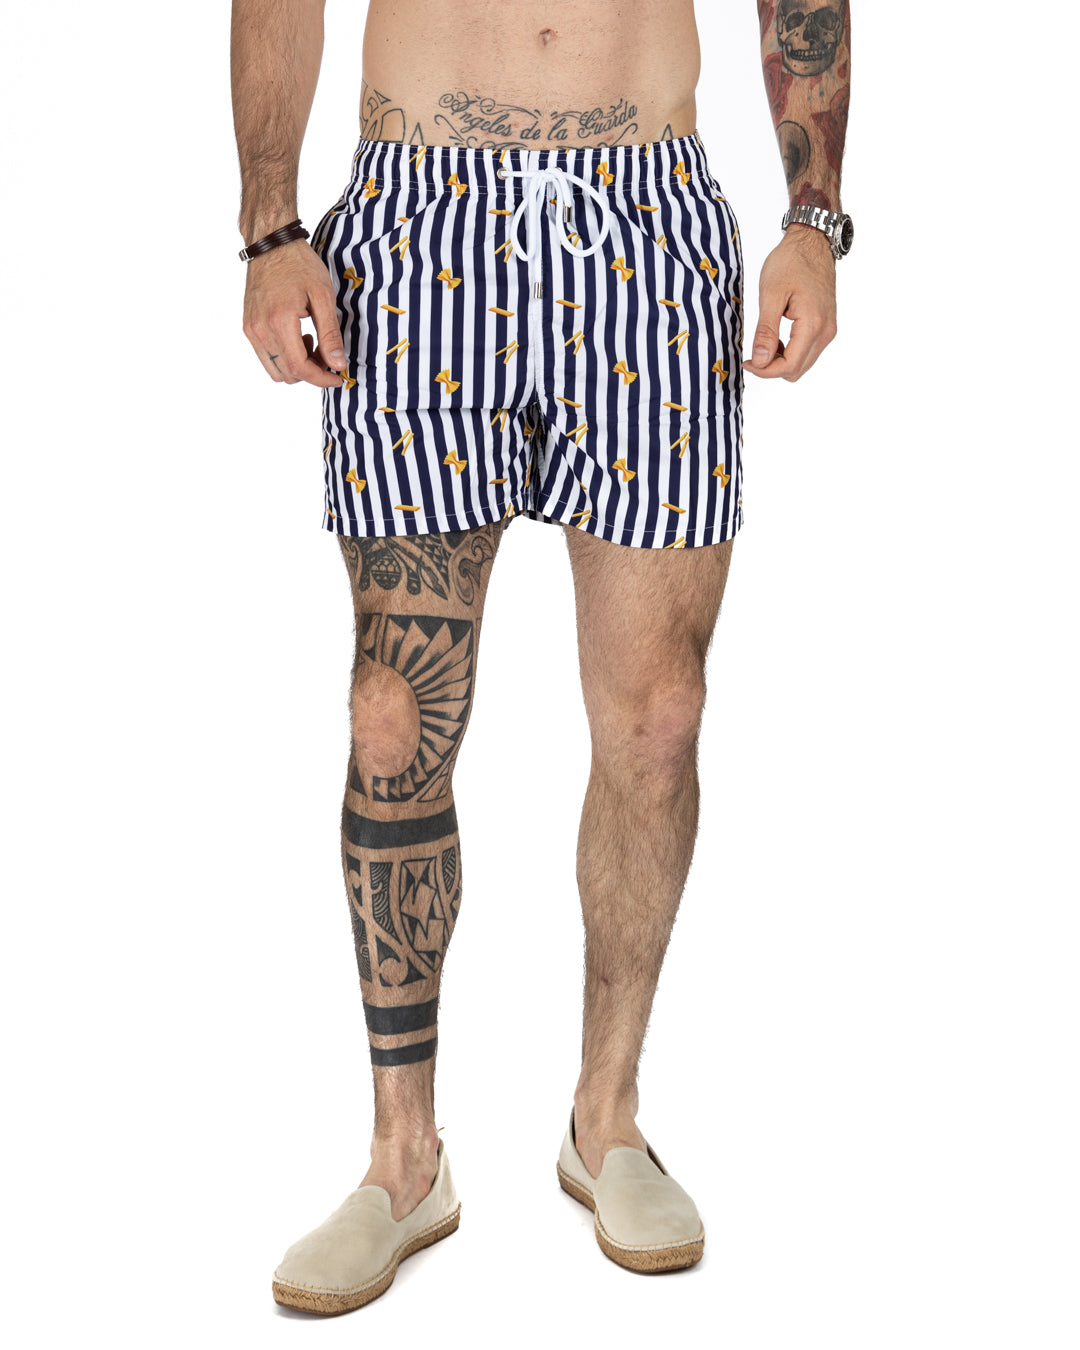 Swimsuit - Blue striped paste pattern